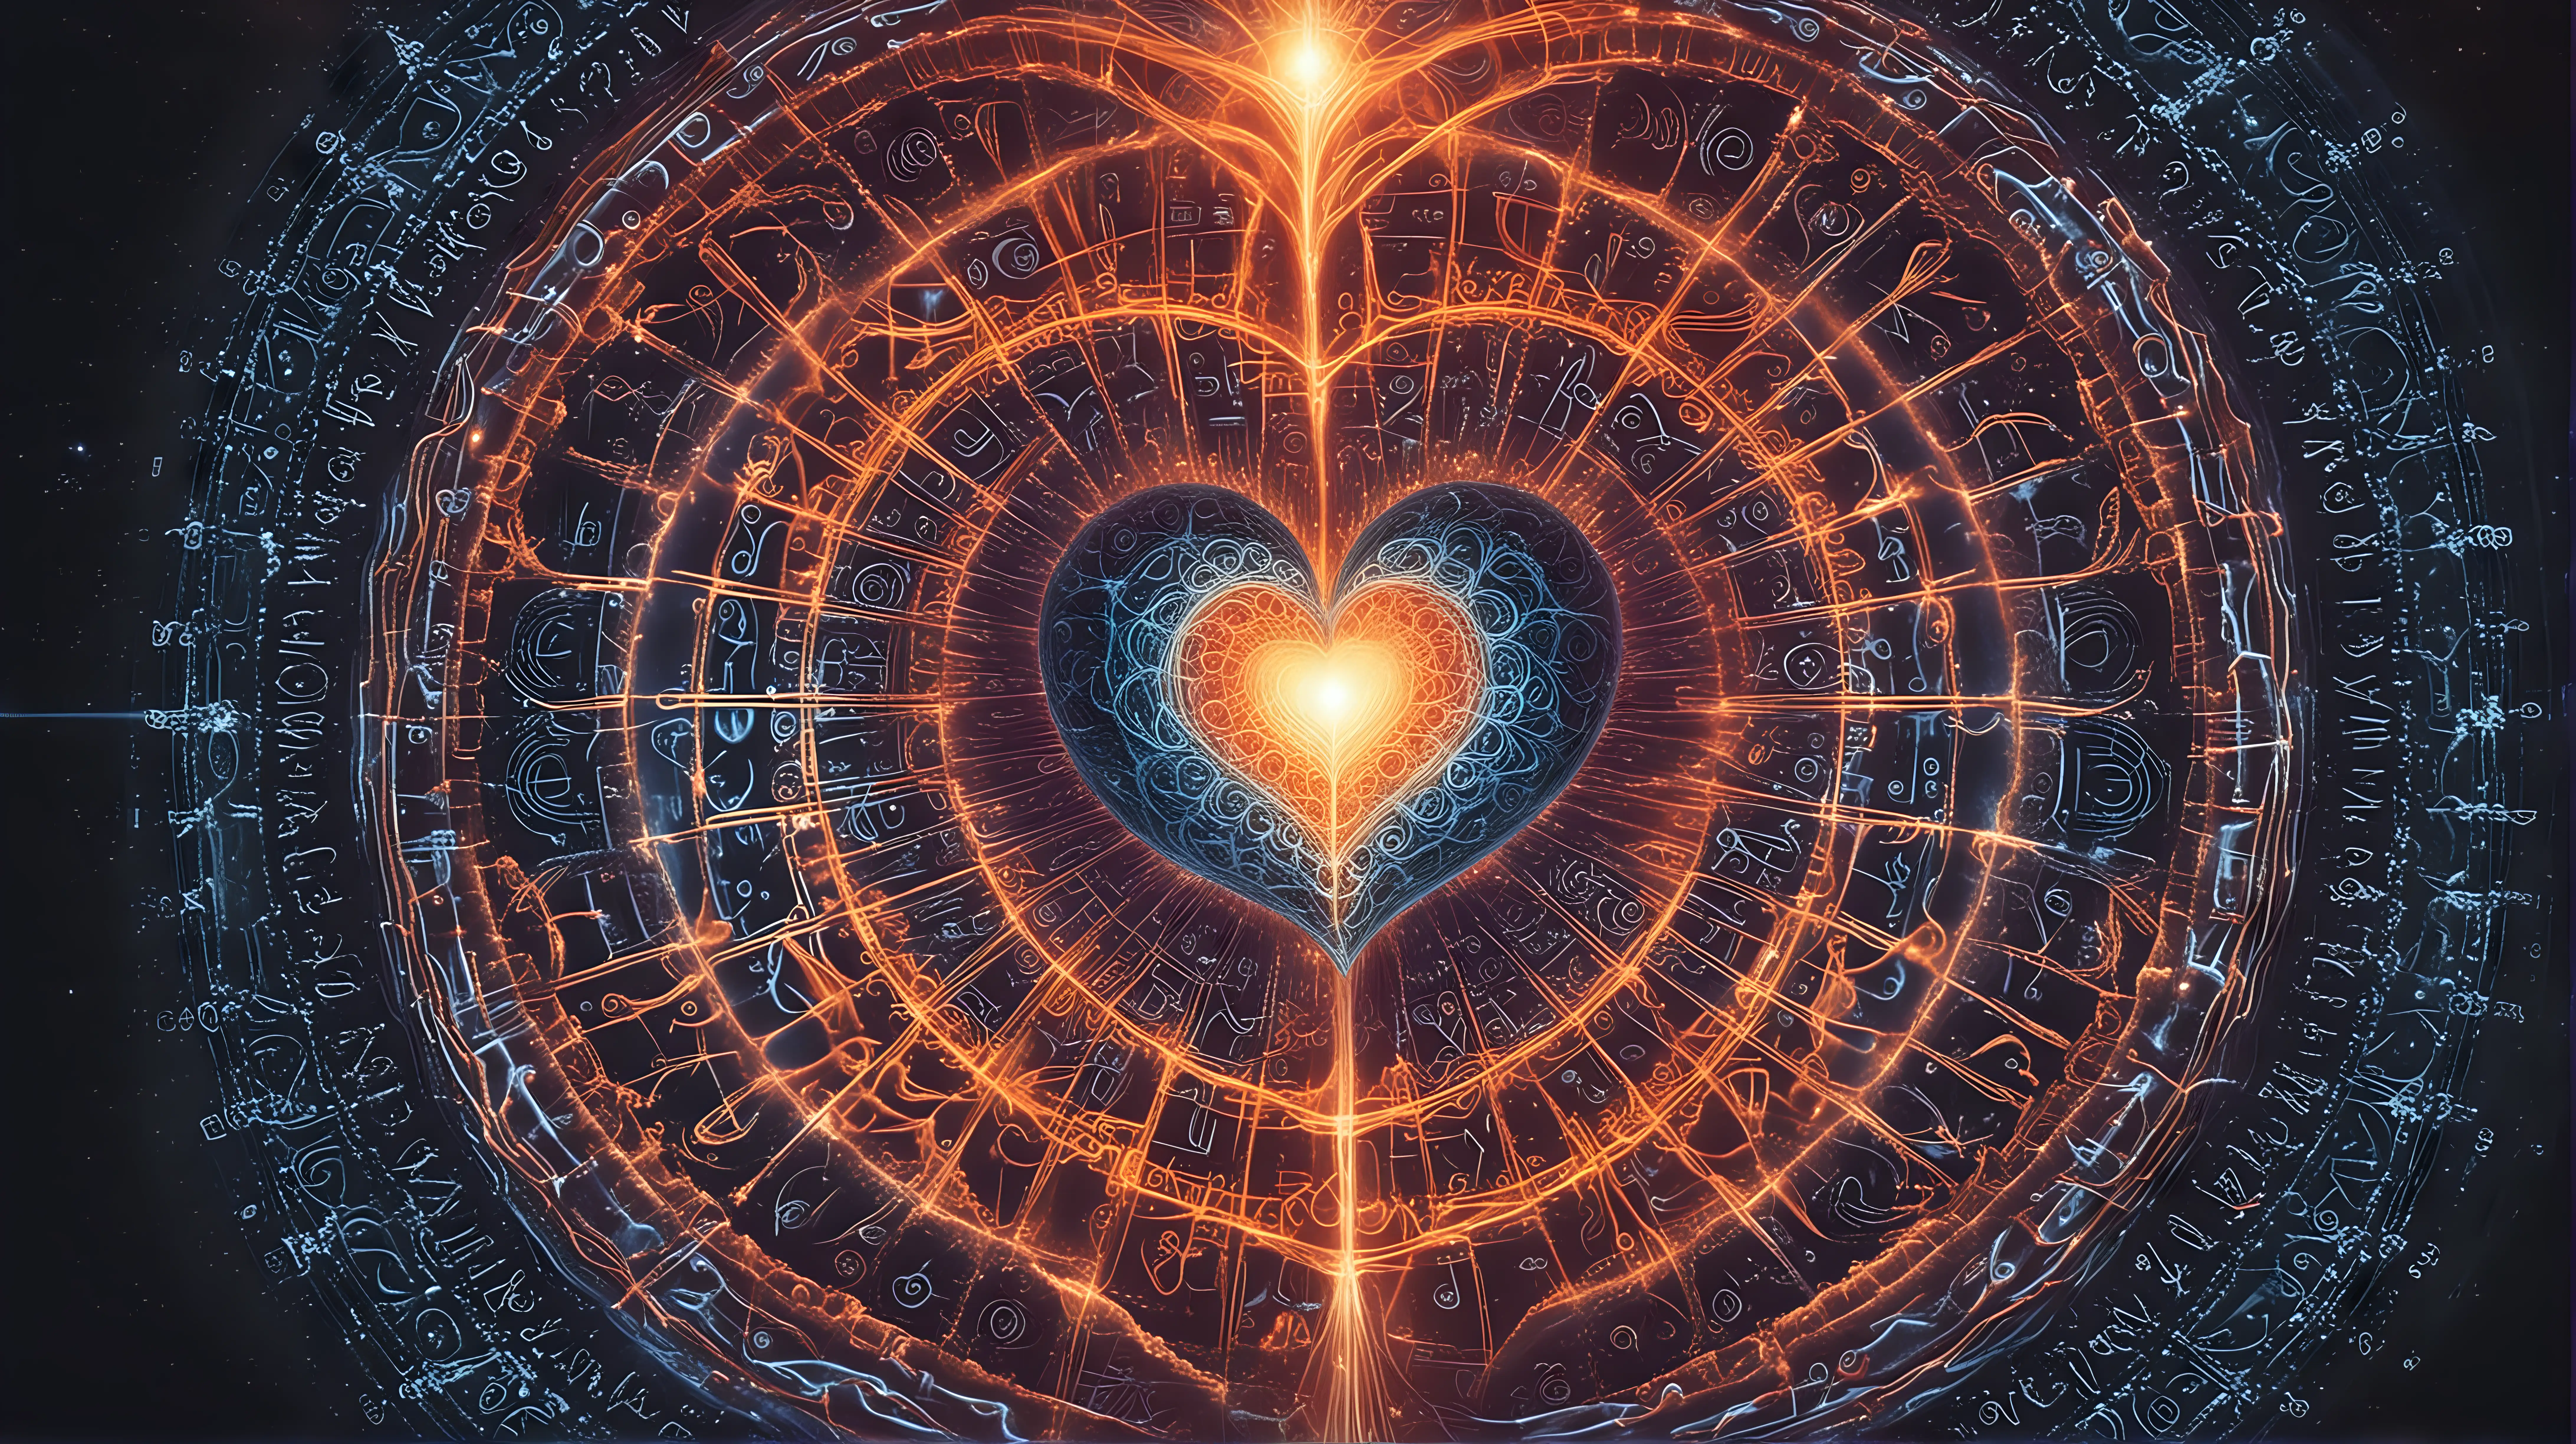 Divine Voice Alchemy Soul Harmony Transmission with Heartshaped Cymatics